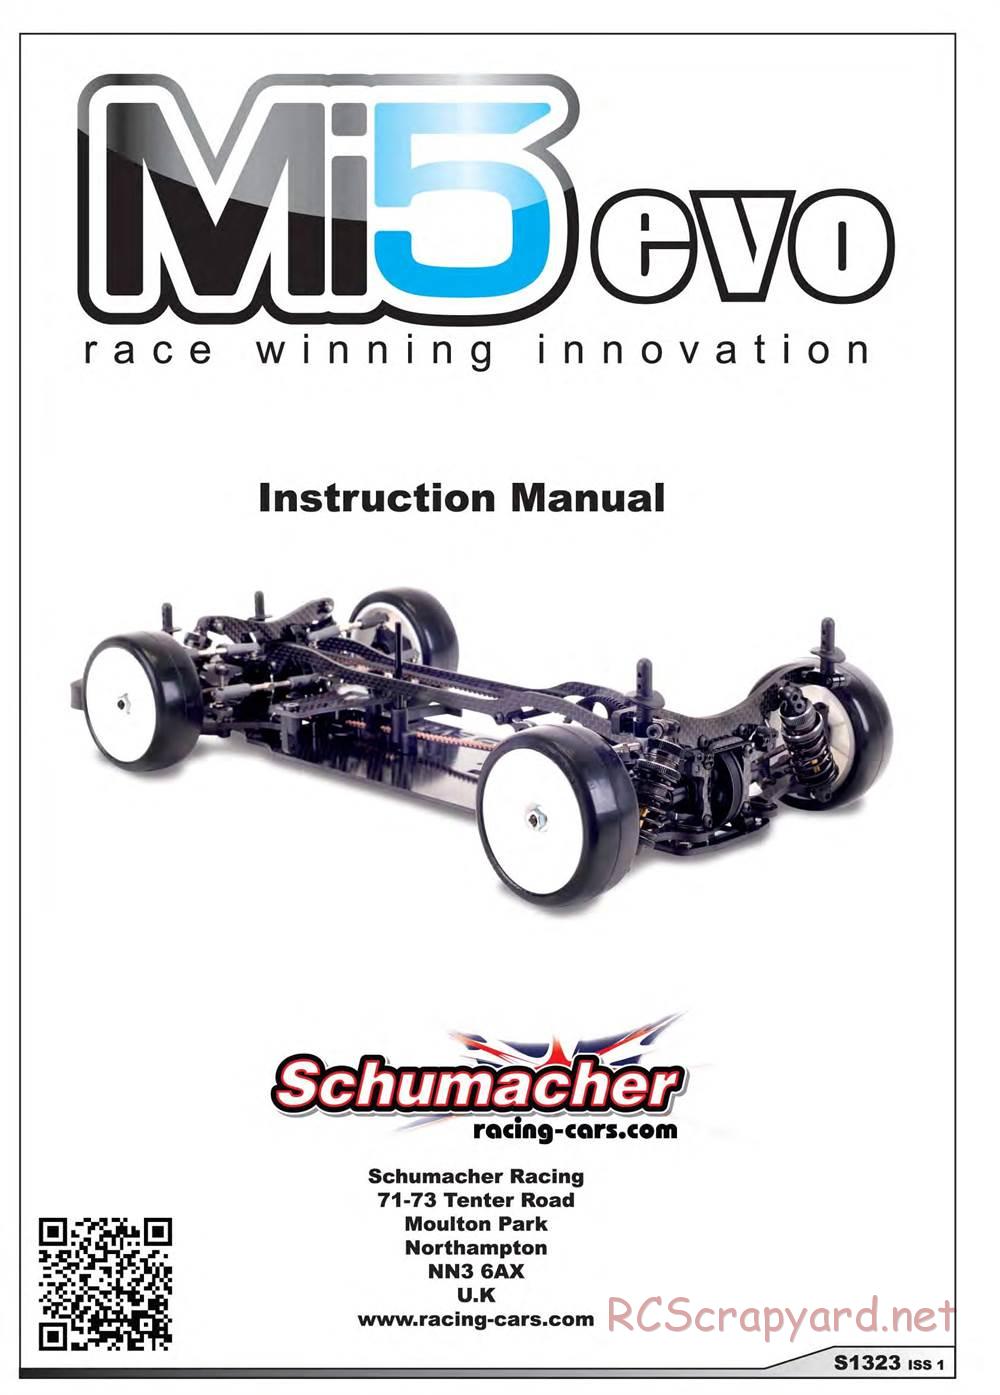 Schumacher - Mi5 Evo - Manual - Page 1